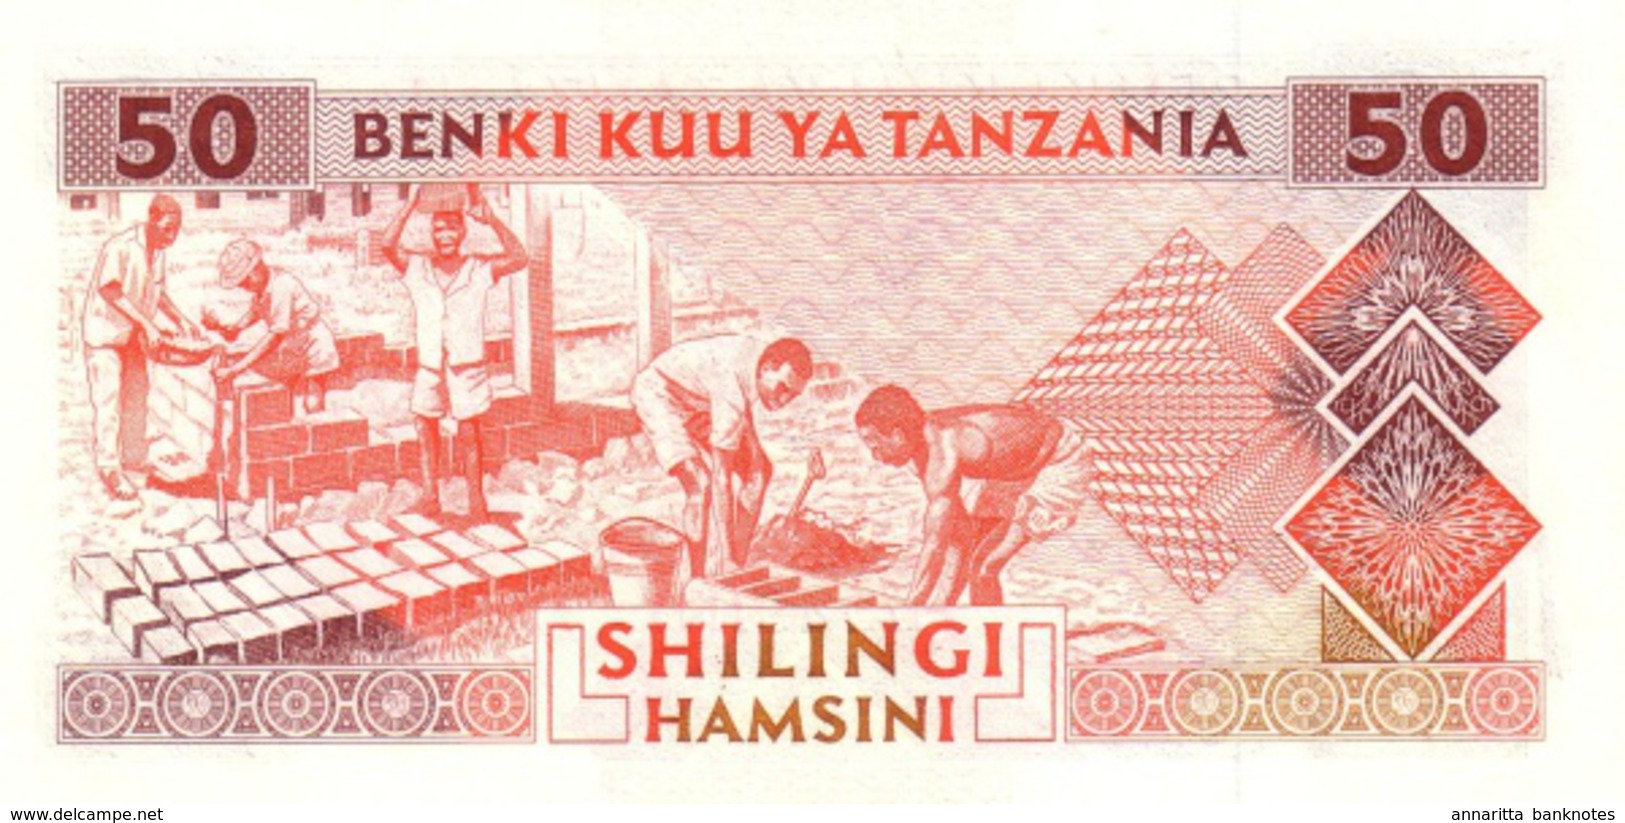 TANZANIA 50 SHILLINGS ND (1993) P-23a UNC [TZ122a] - Tanzania